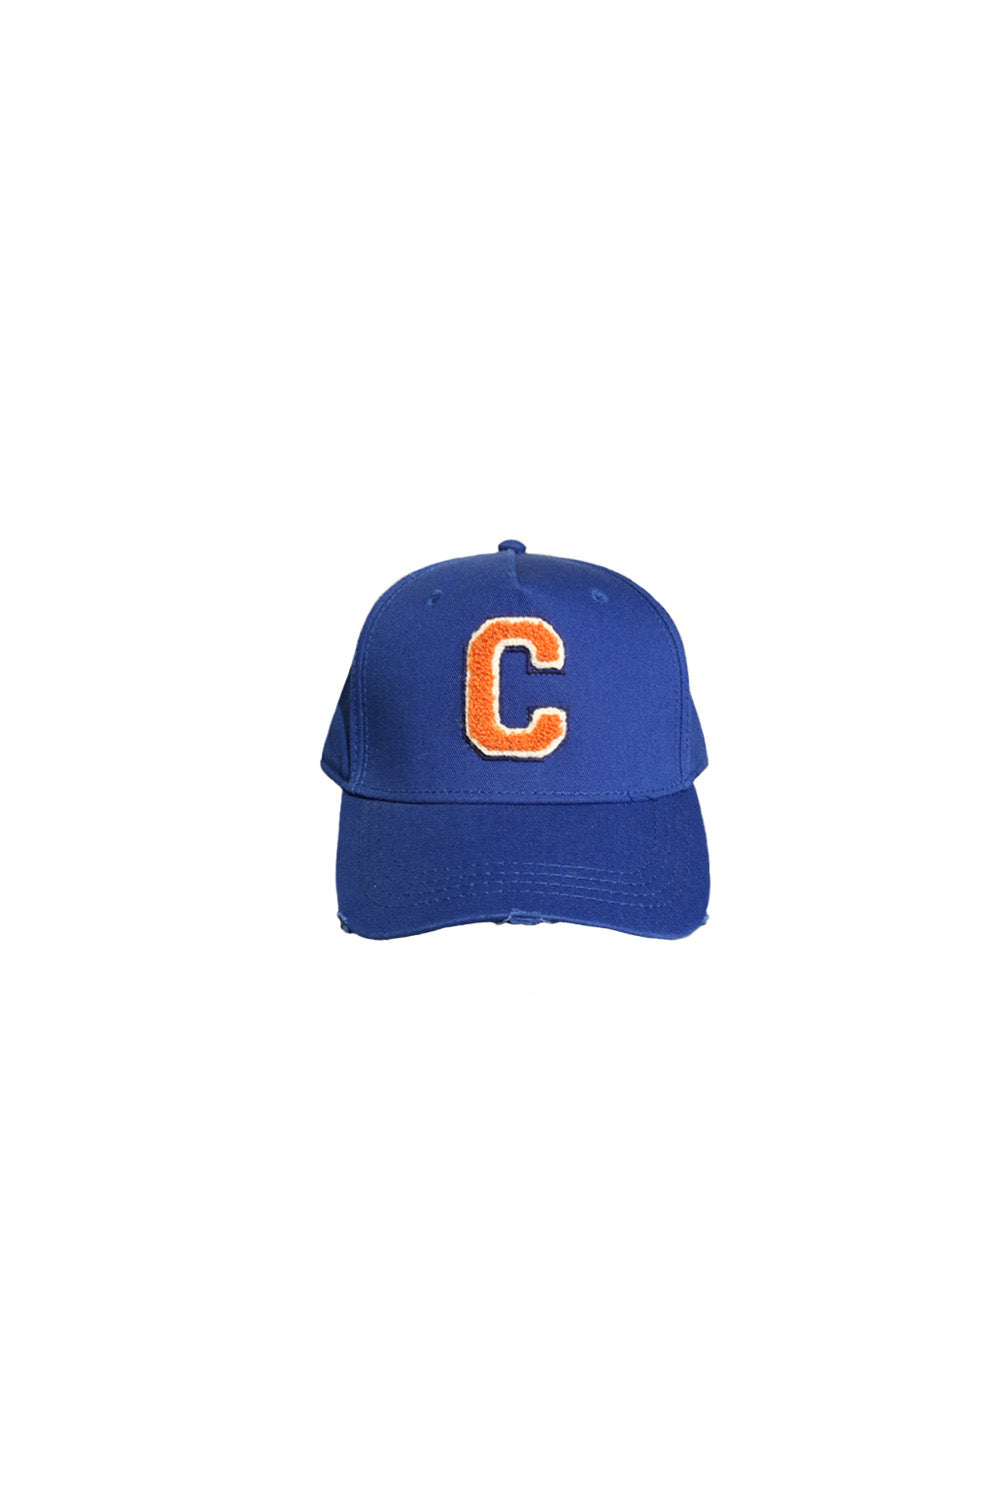 "C" Logo Baseball Cap